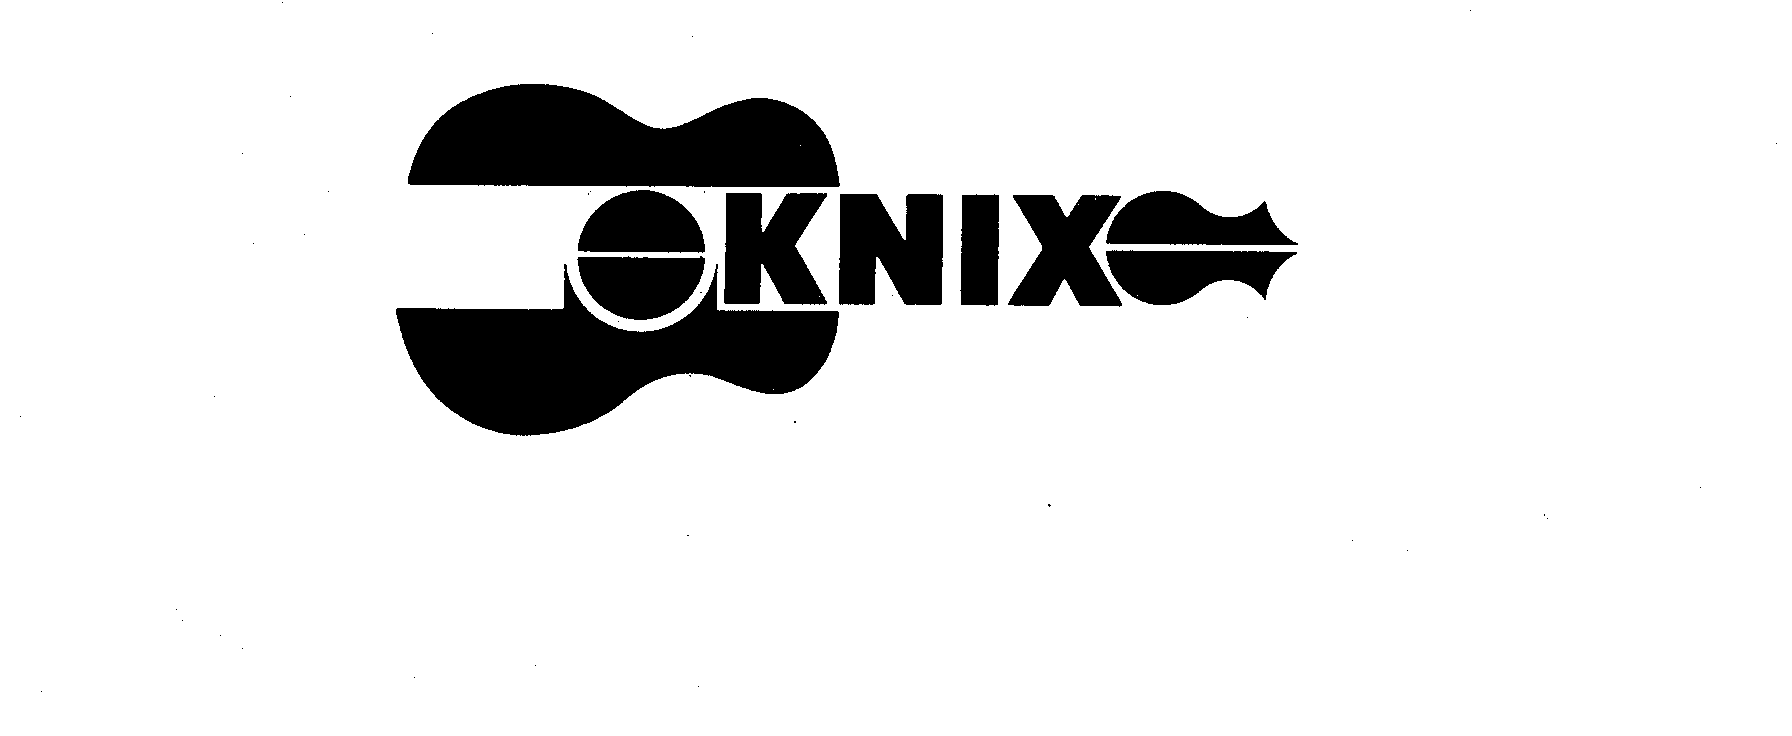 HITOUCH - Knix Wear Inc. Trademark Registration